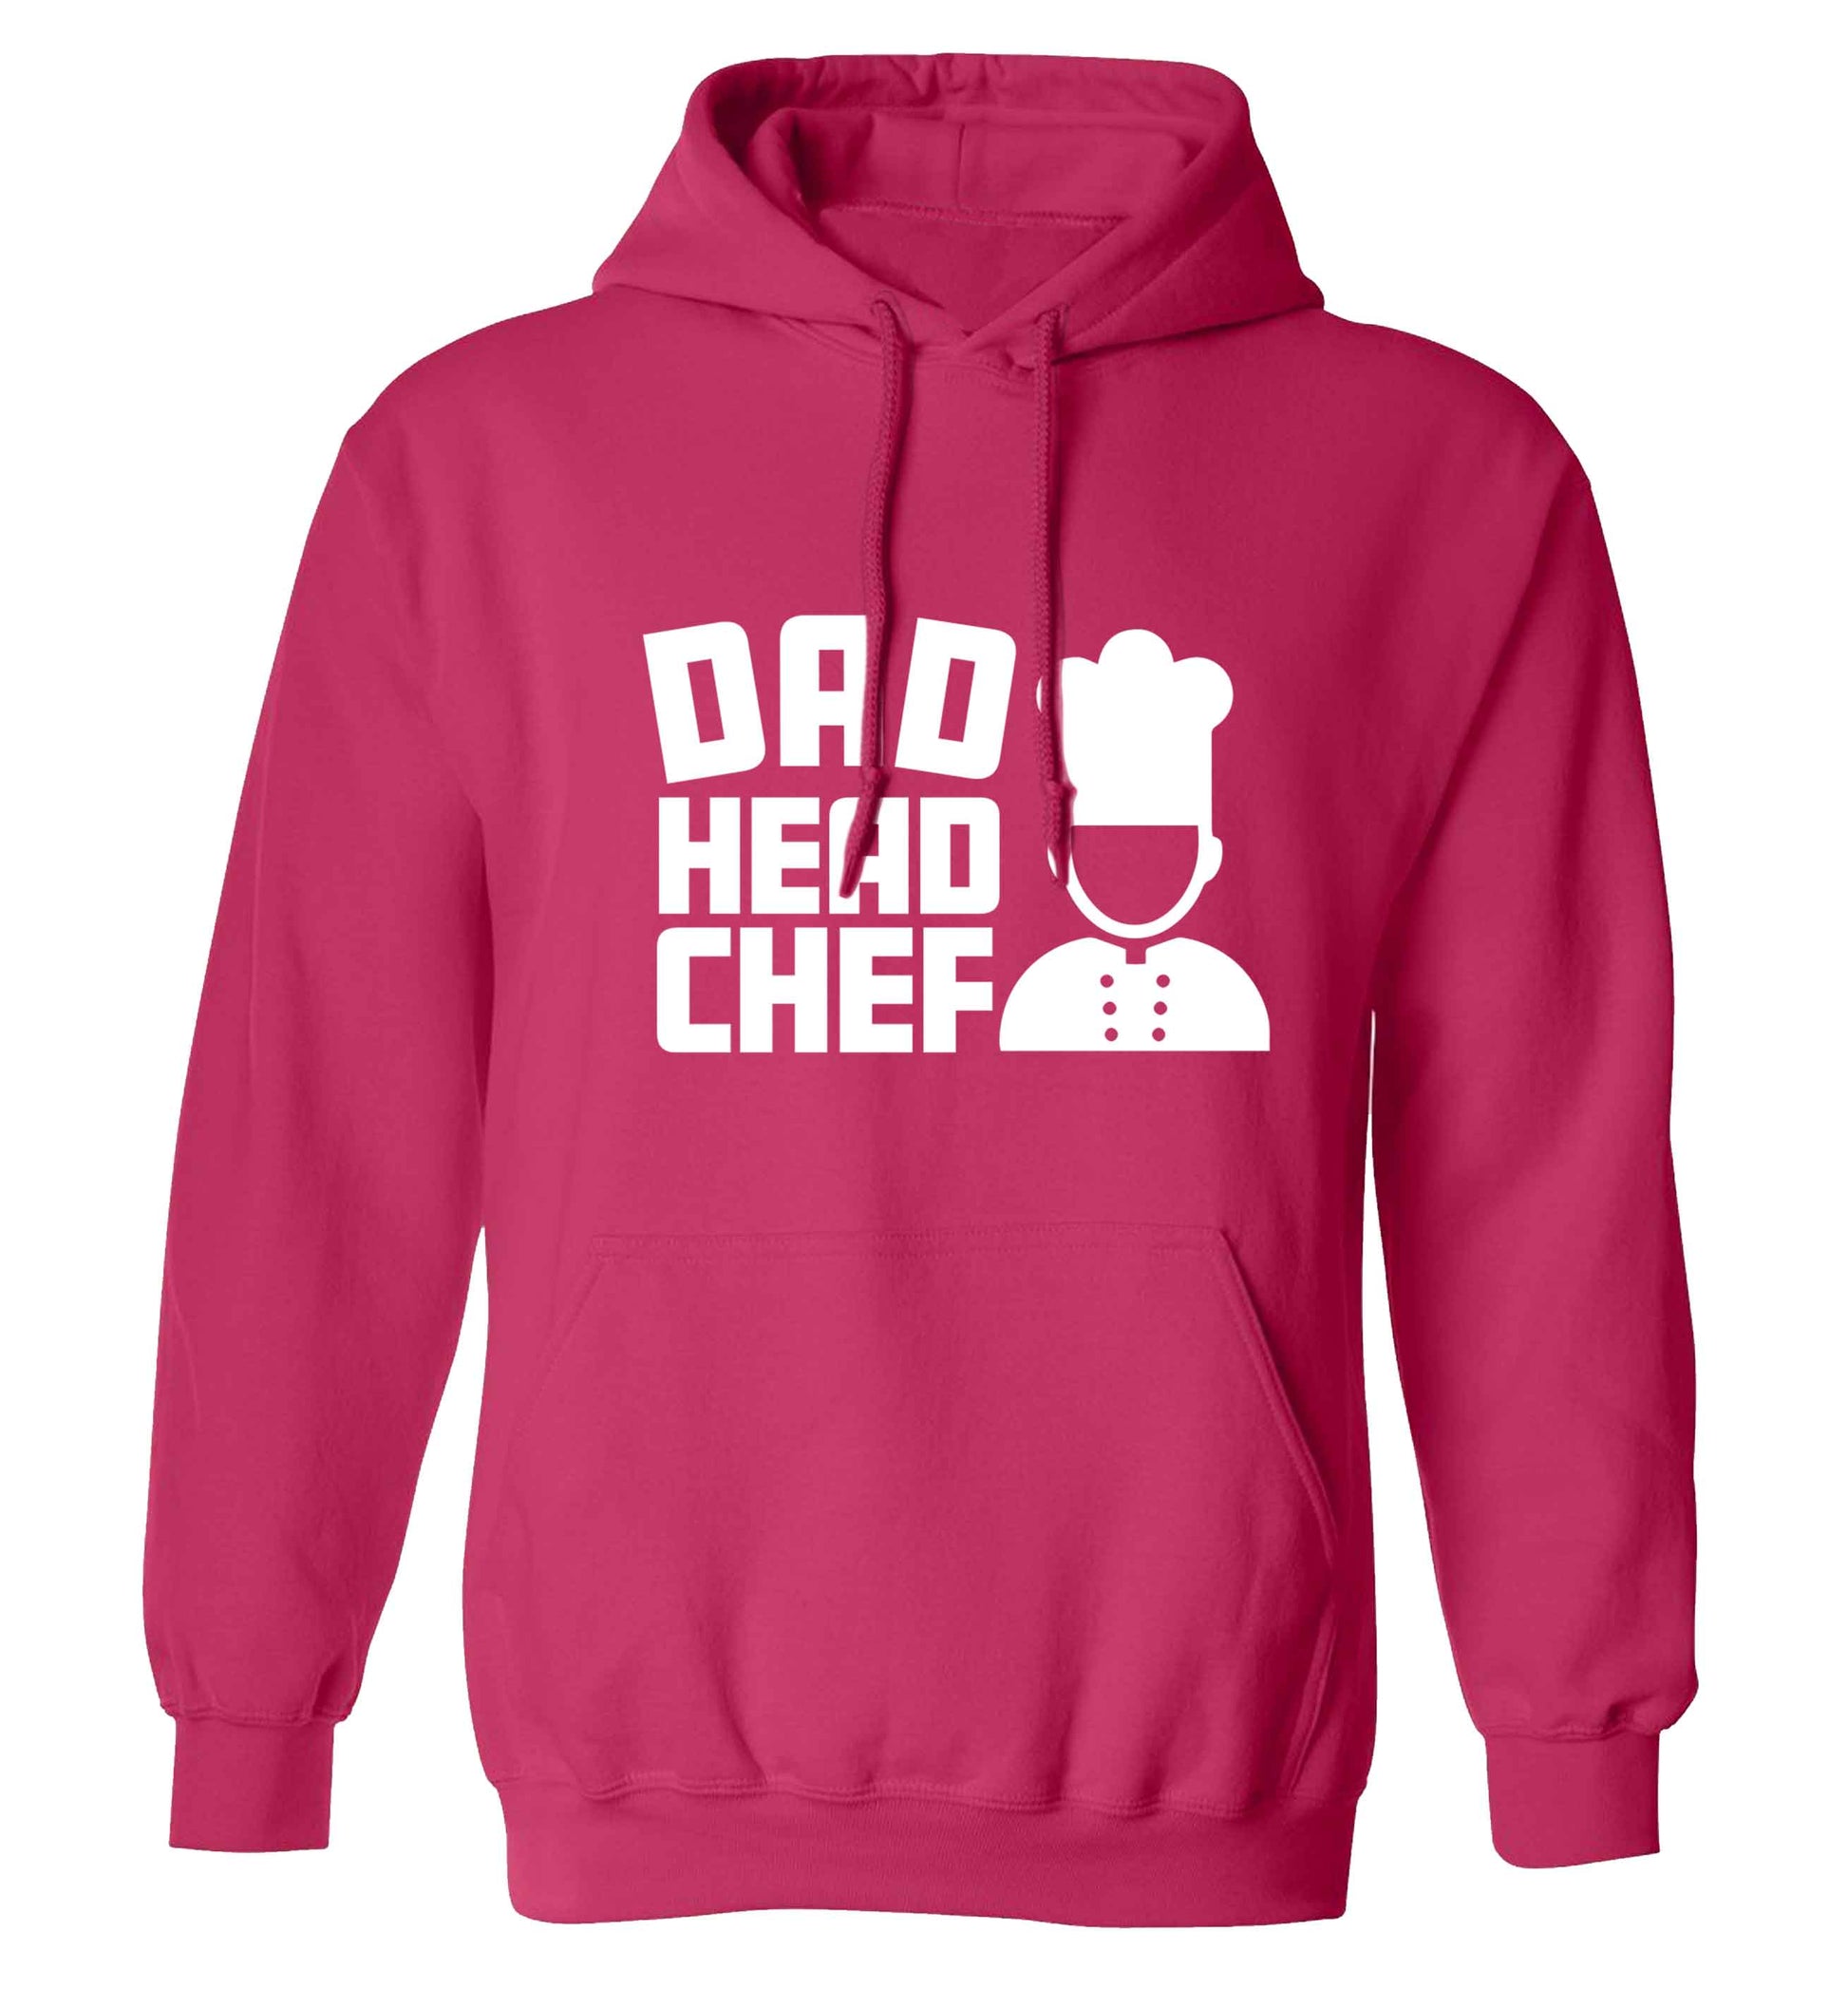 Dad head chef adults unisex pink hoodie 2XL